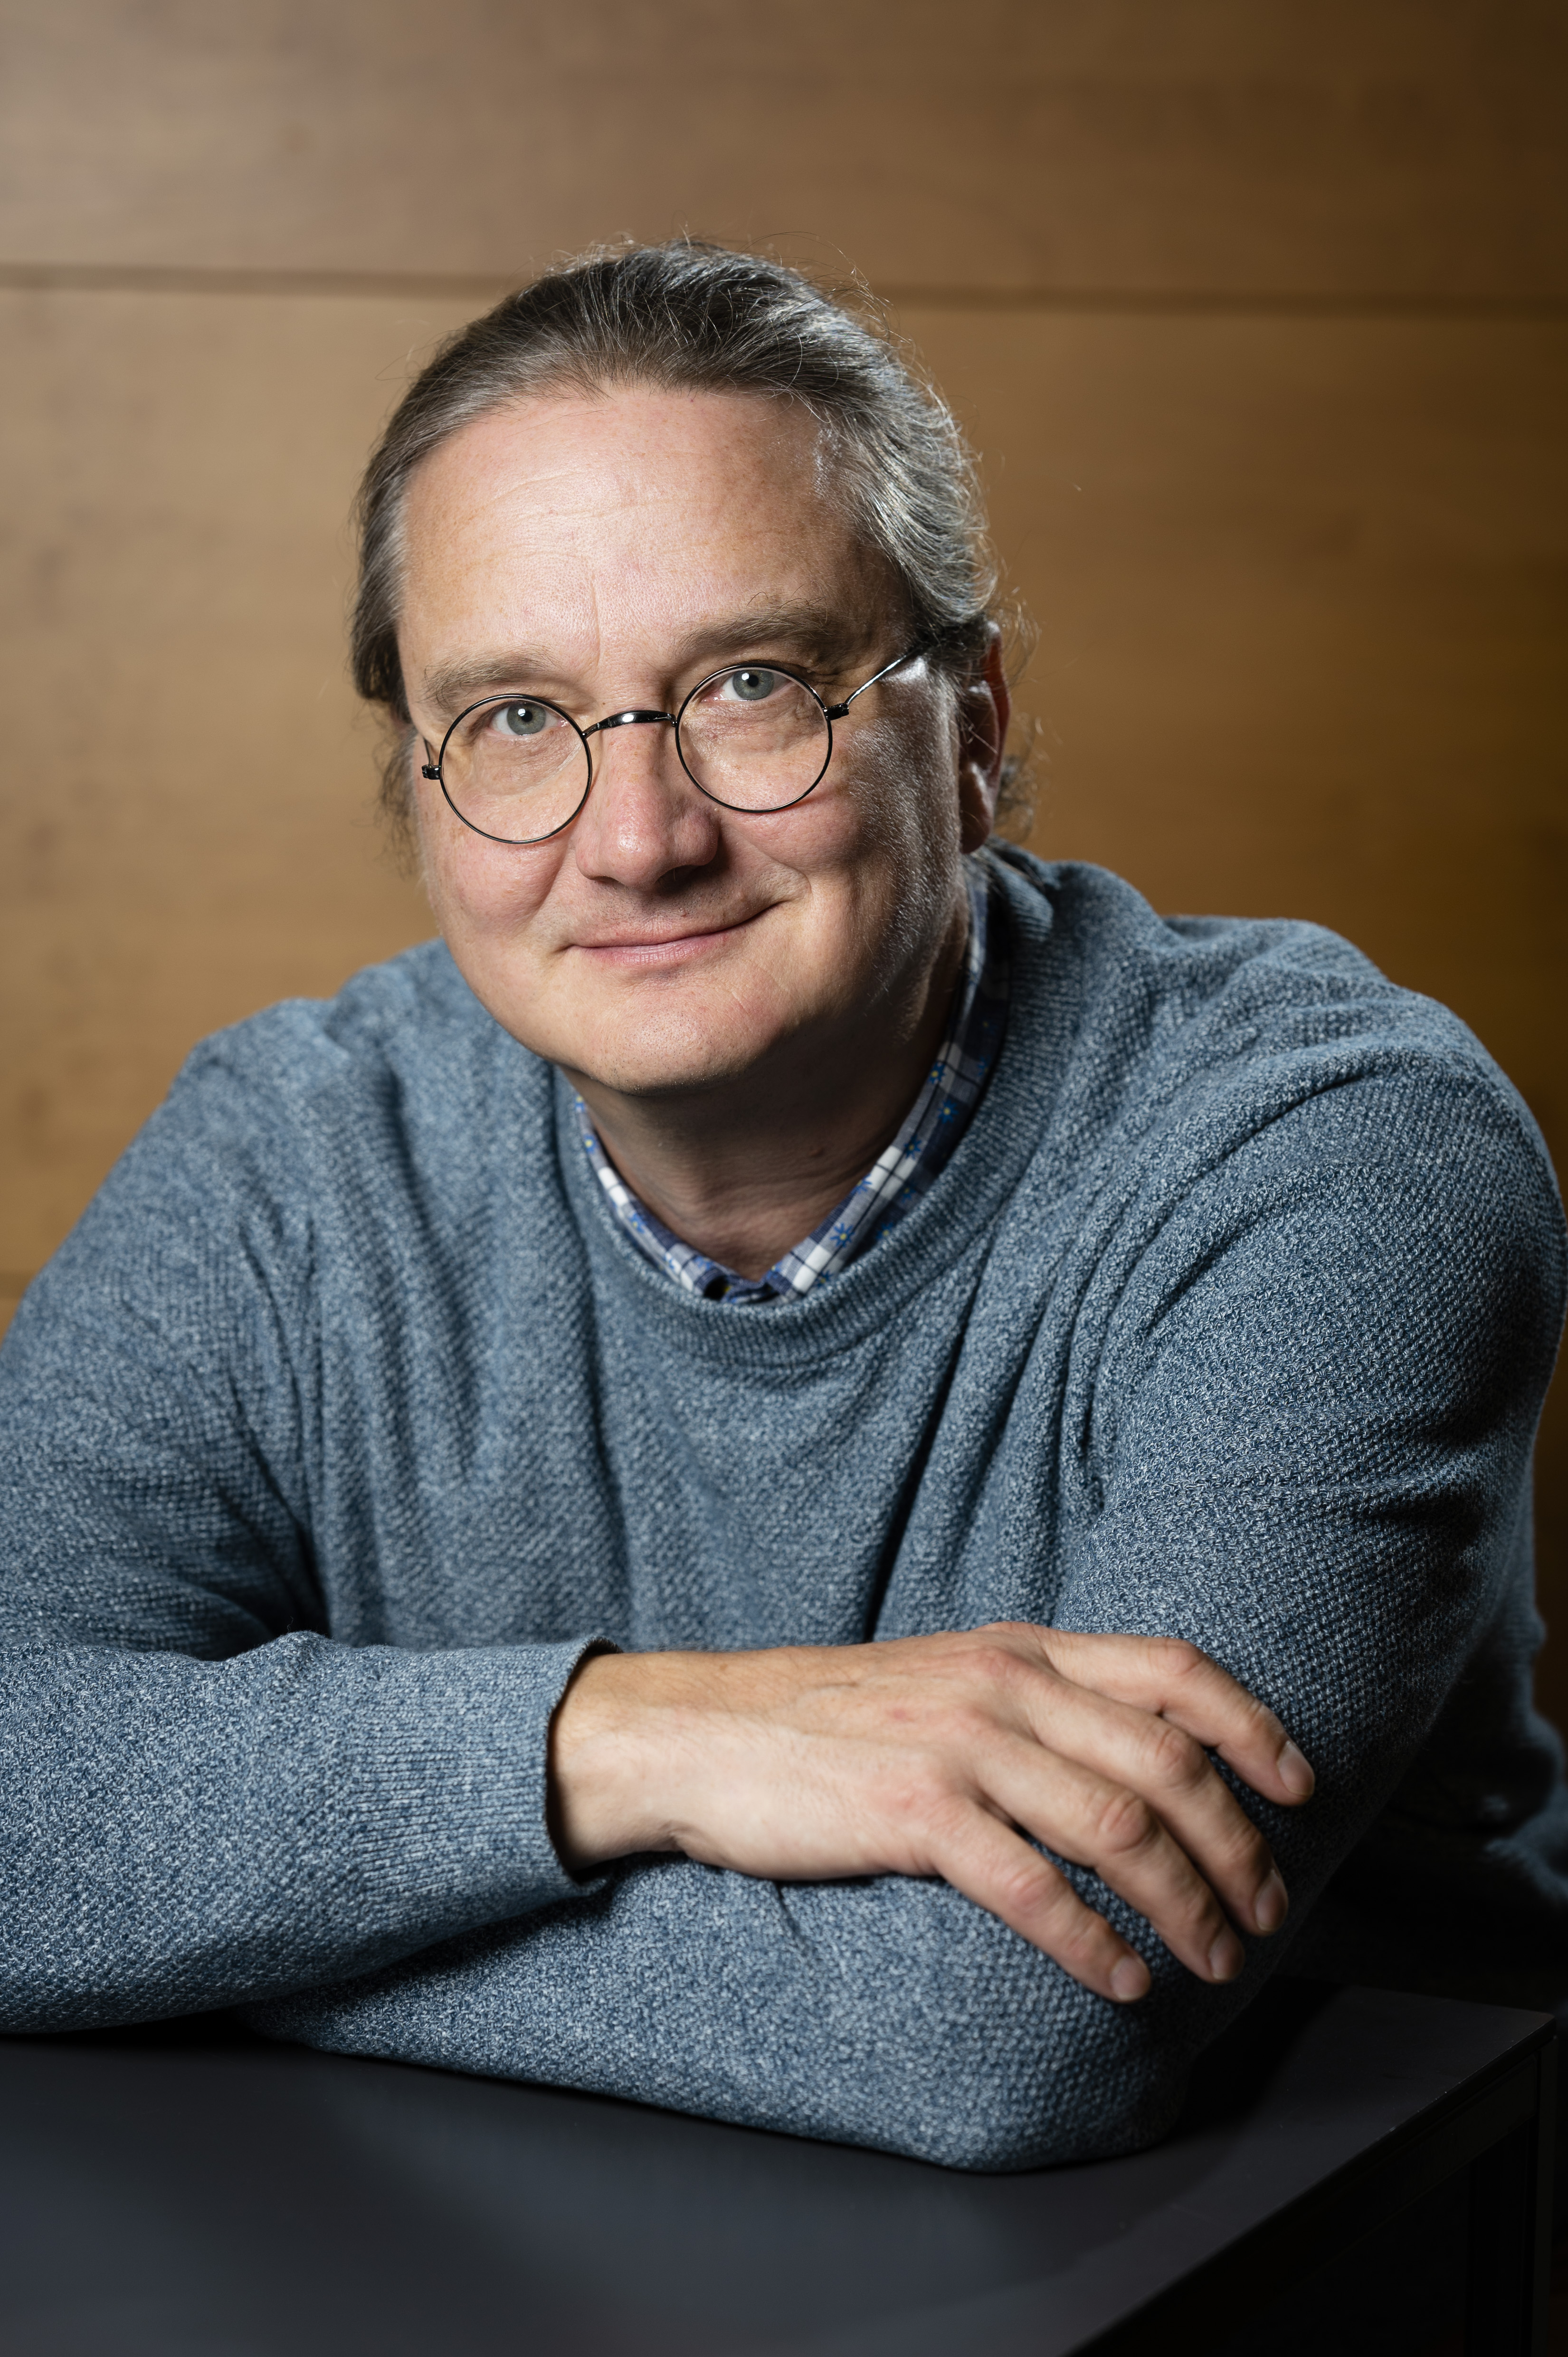 Antti Ripatti, photo by Veikko Somerpuro, 2022